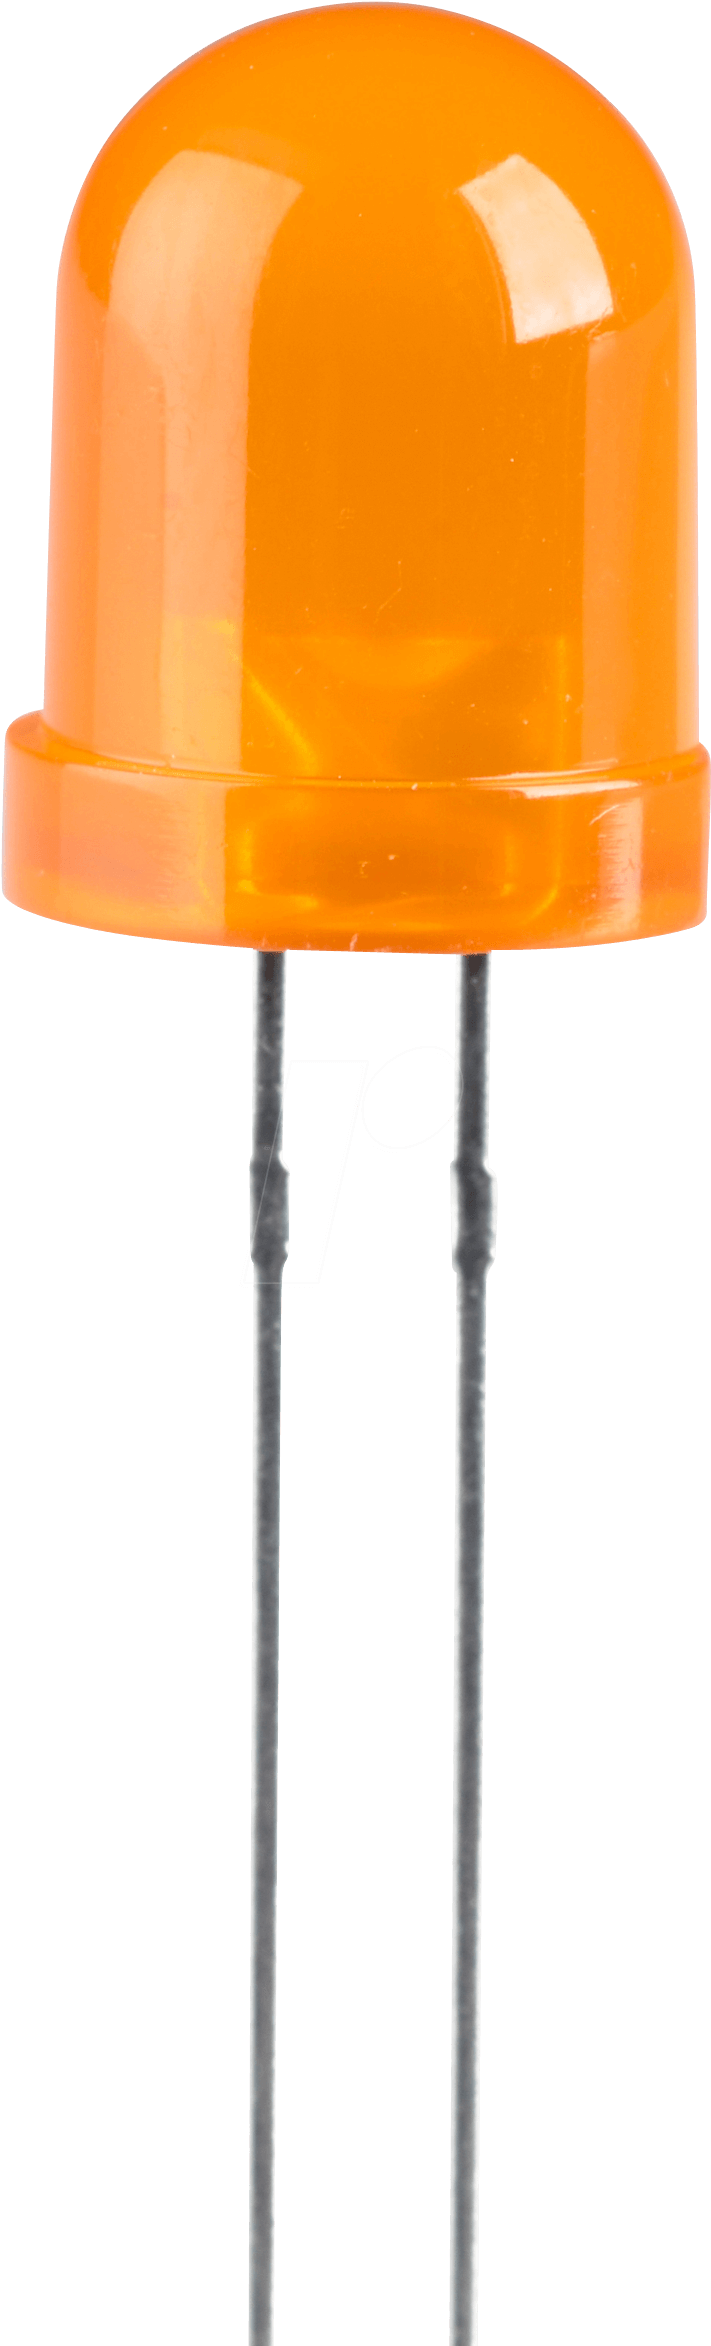 A Close Up Of A Transistor